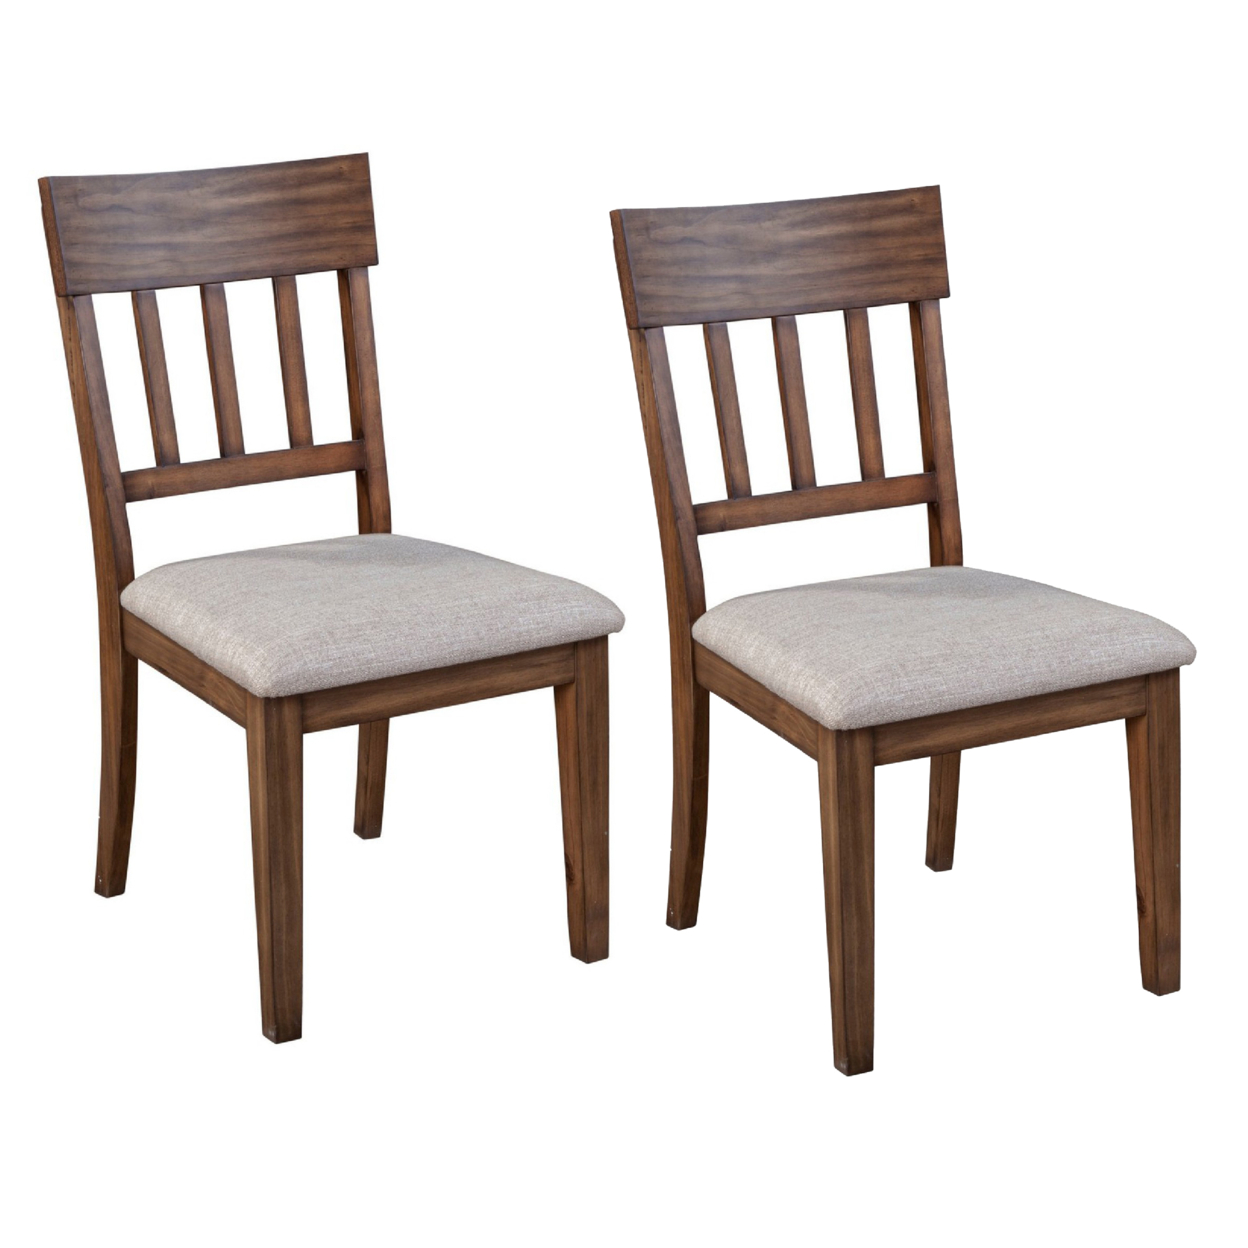 Dan 25 Inch Dining Side Chair, Slatted Back, Gray Cushion, Set Of 2, Brown- Saltoro Sherpi